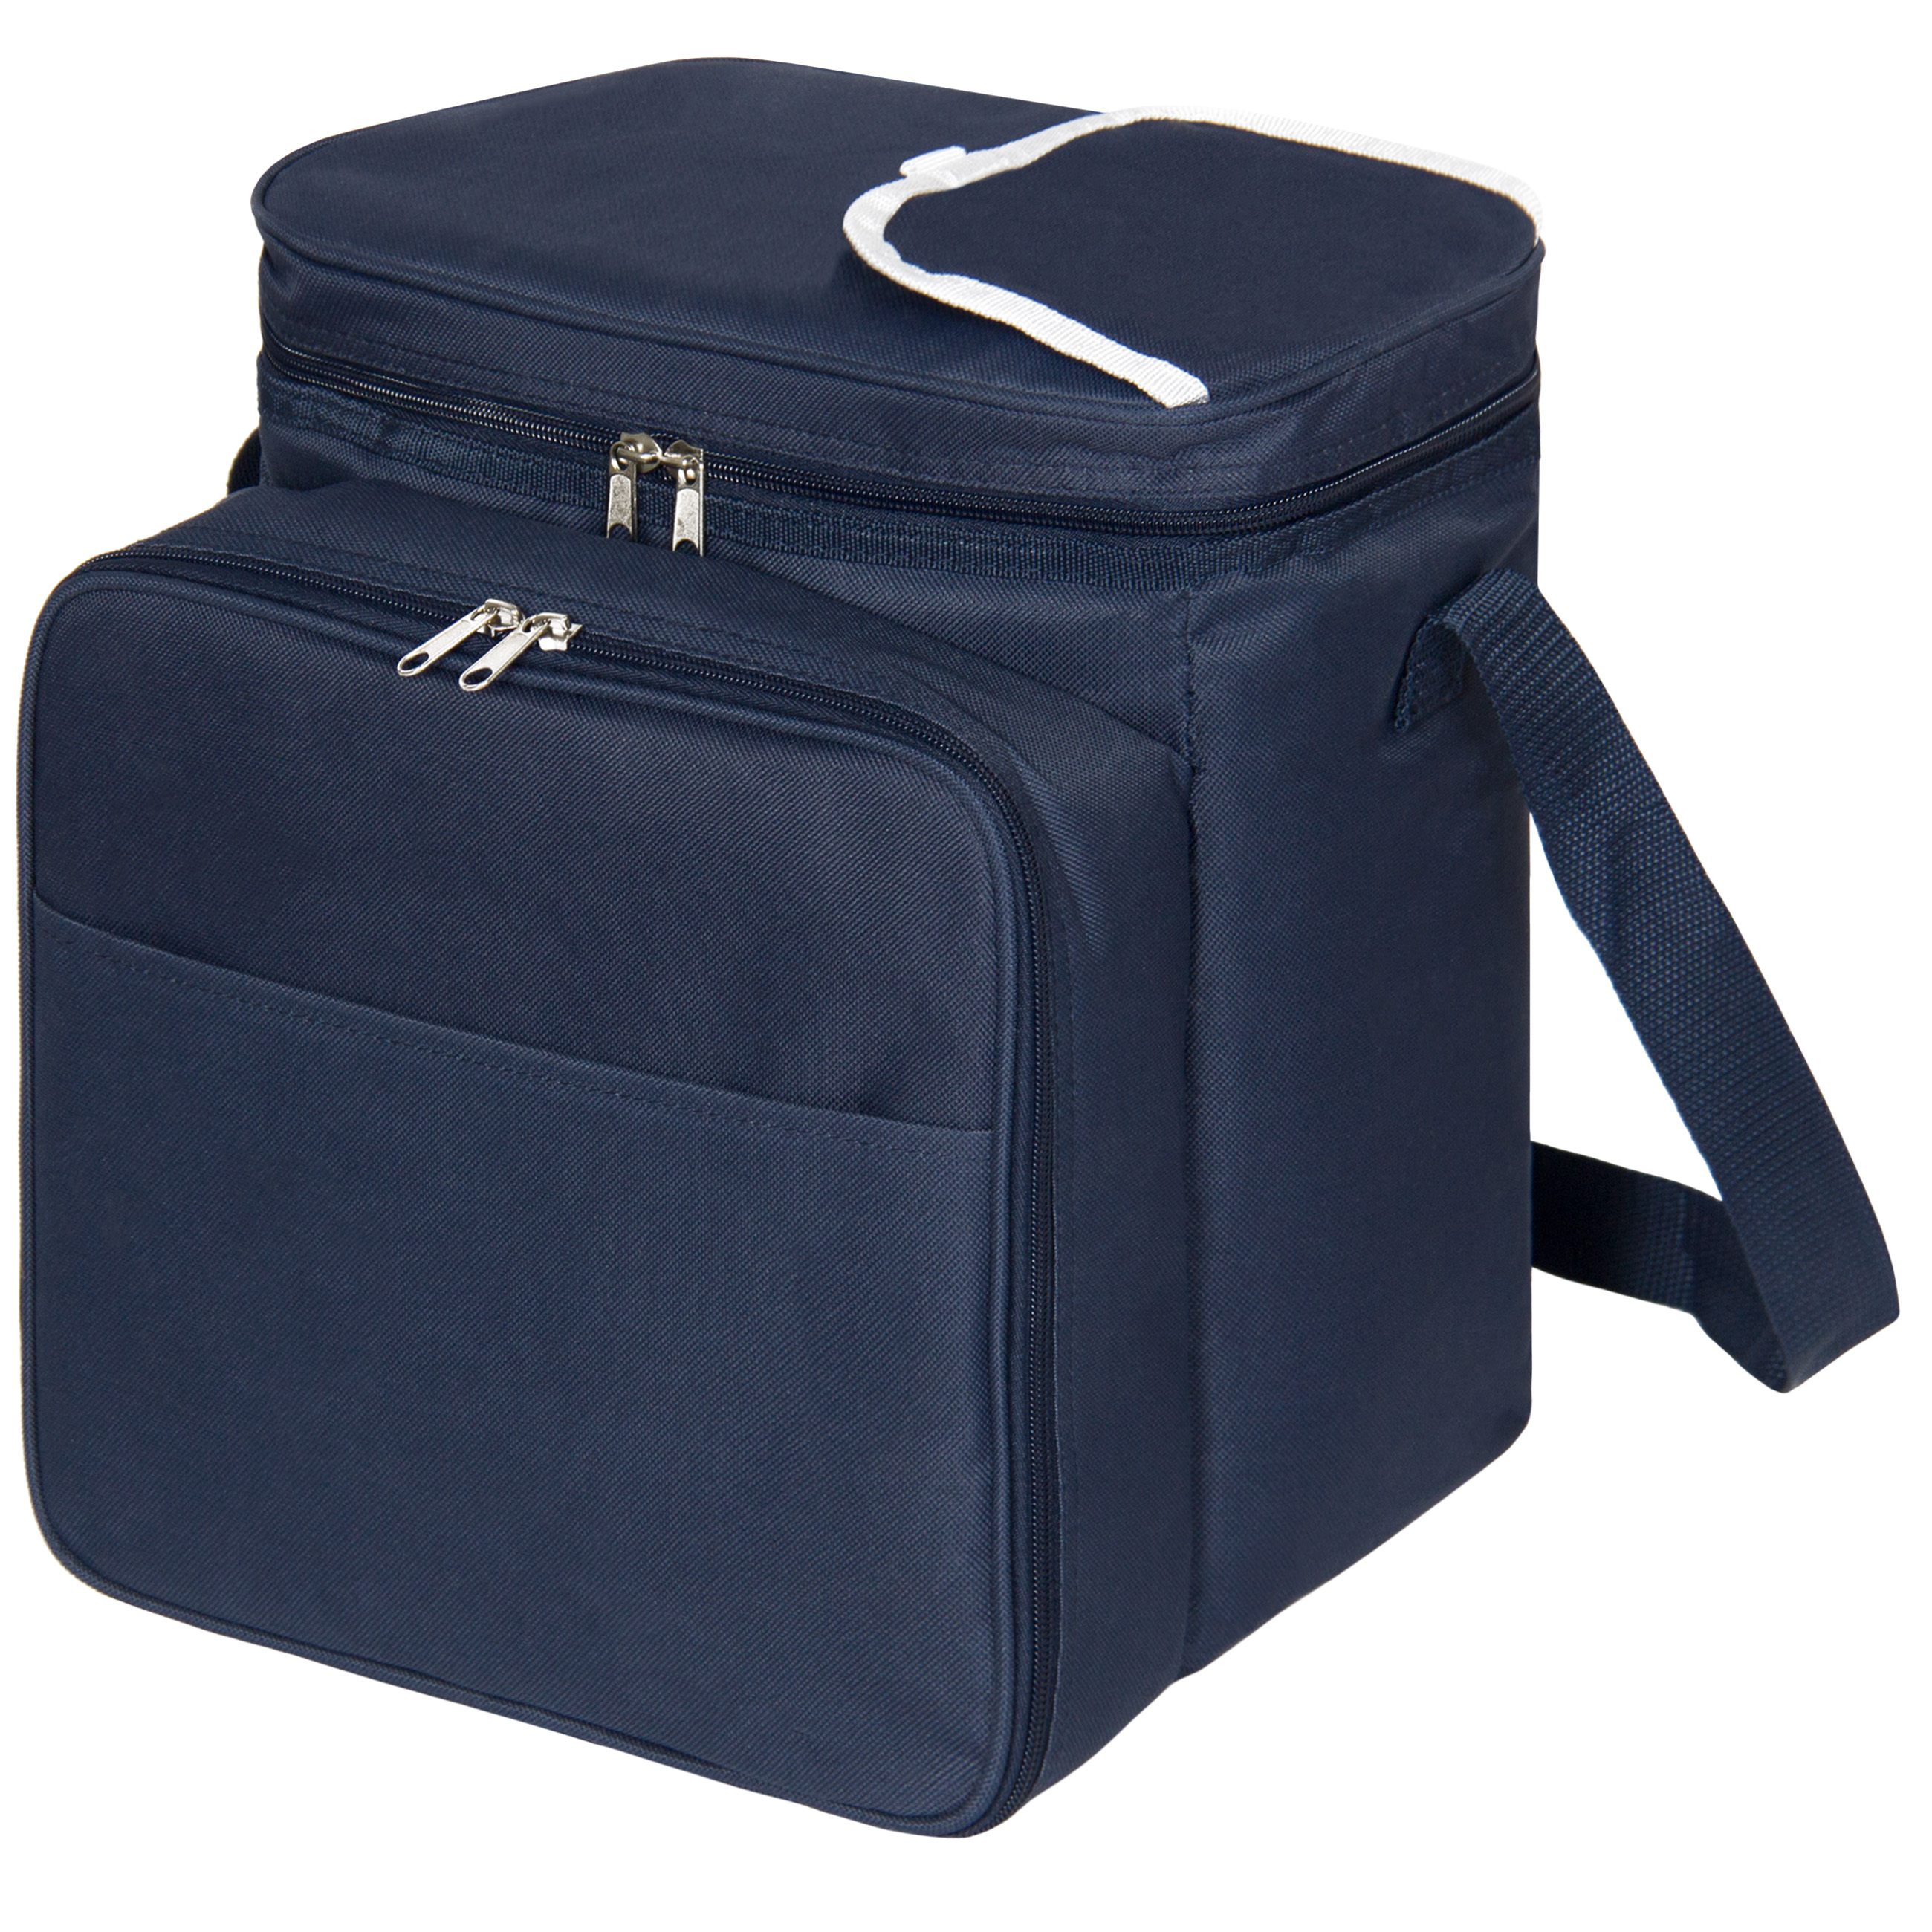 BCP 2-Person Insulated Picnic Bag w/ Flatware, Plates - Blue | eBay